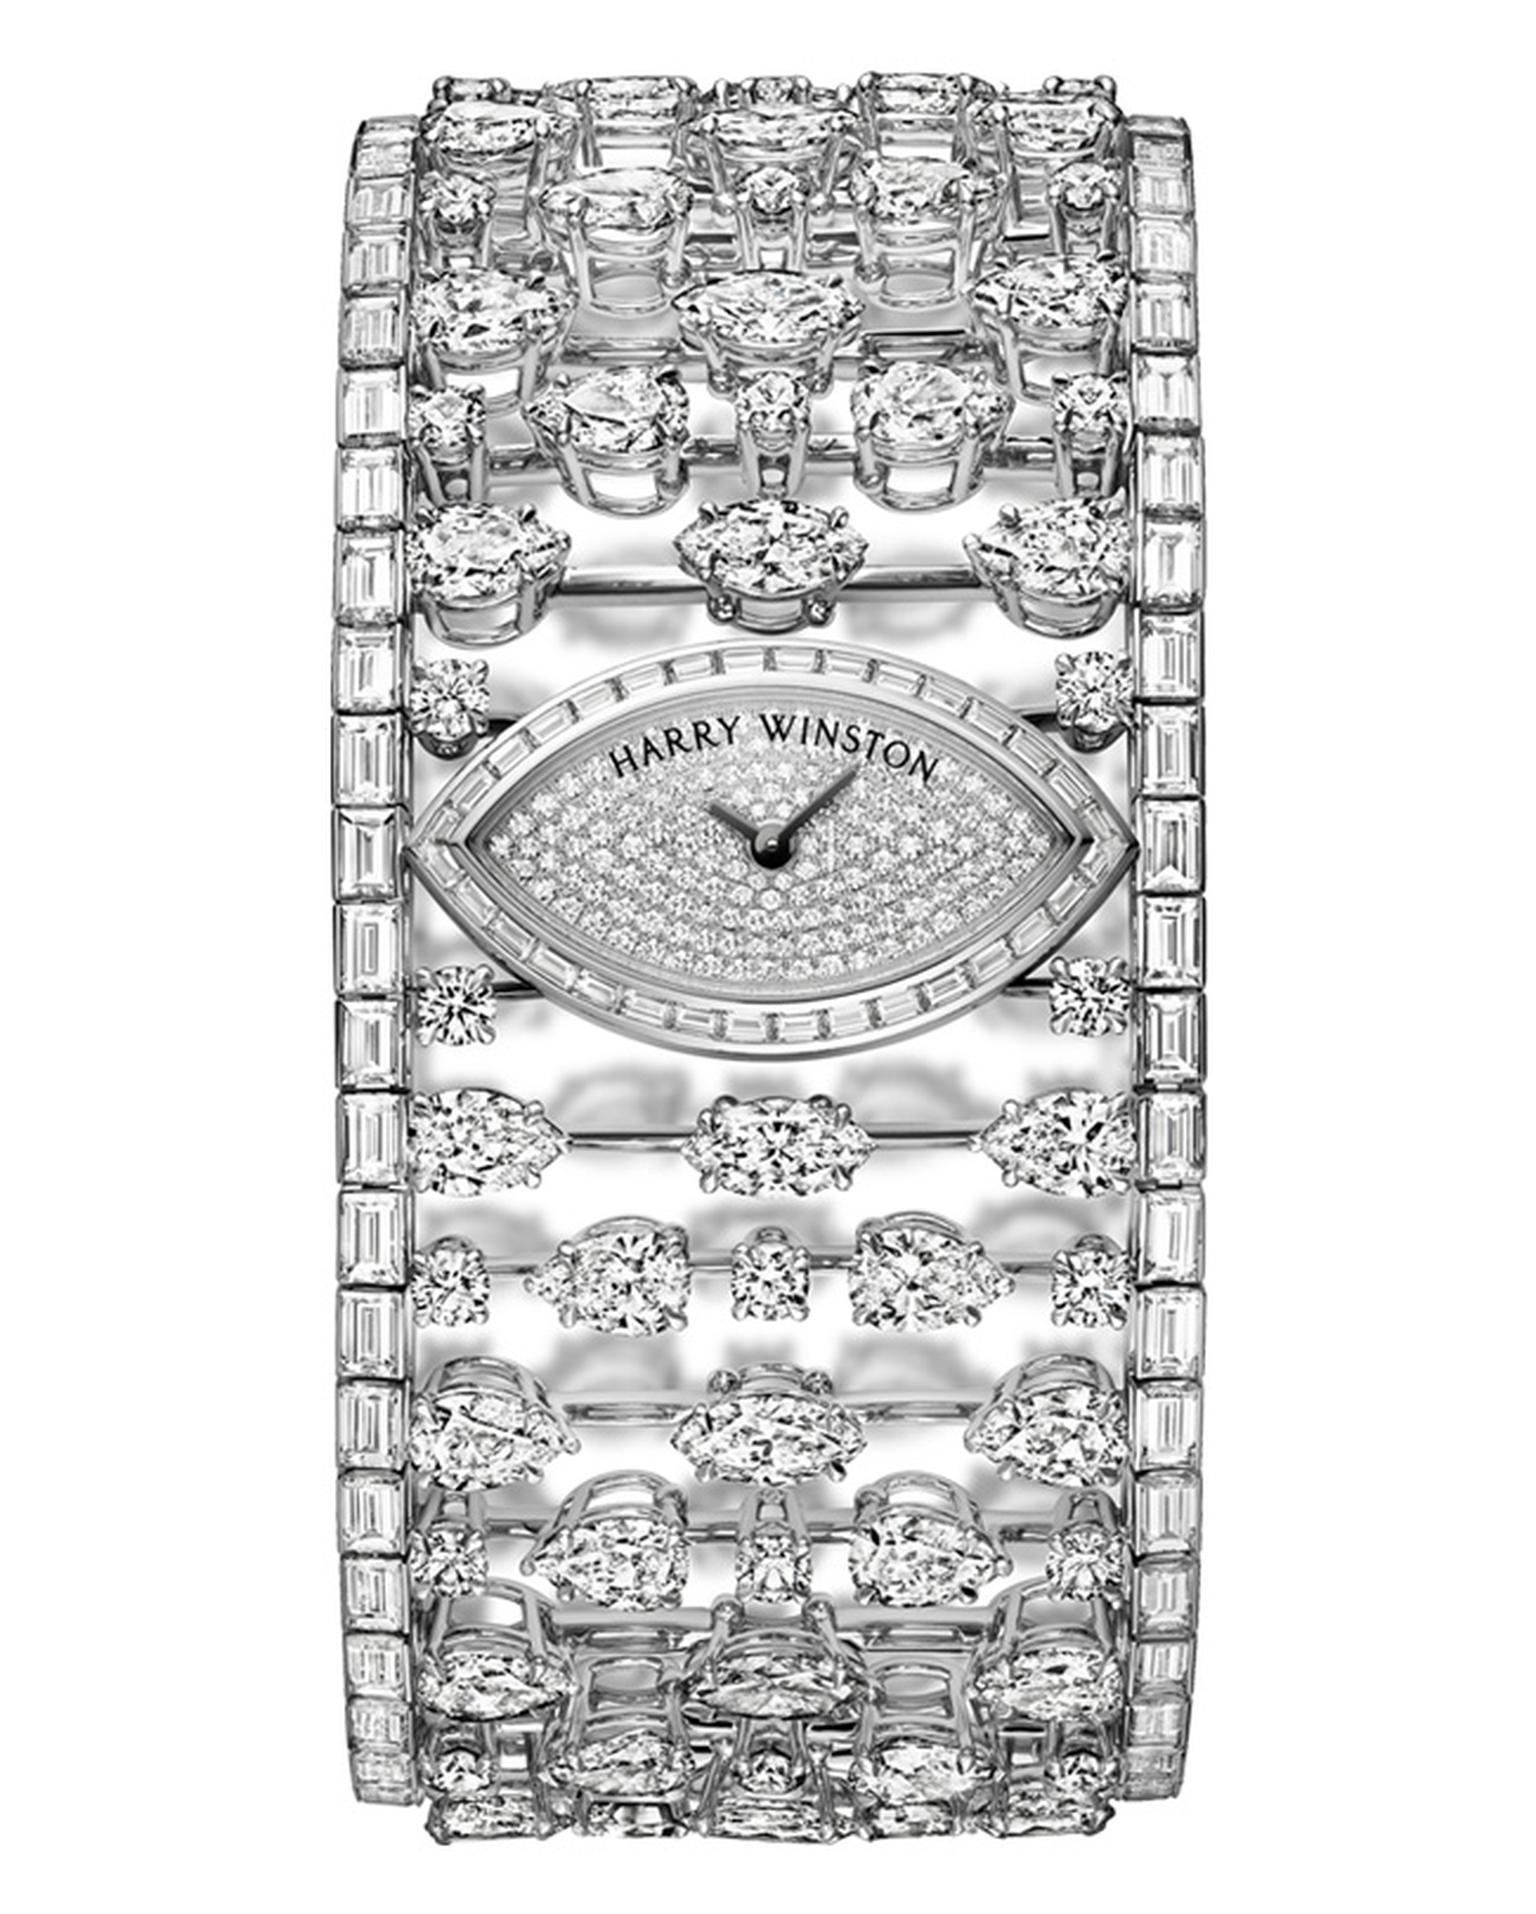 Harry Winston Mrs Winston high jewellery watch_20131115_Main